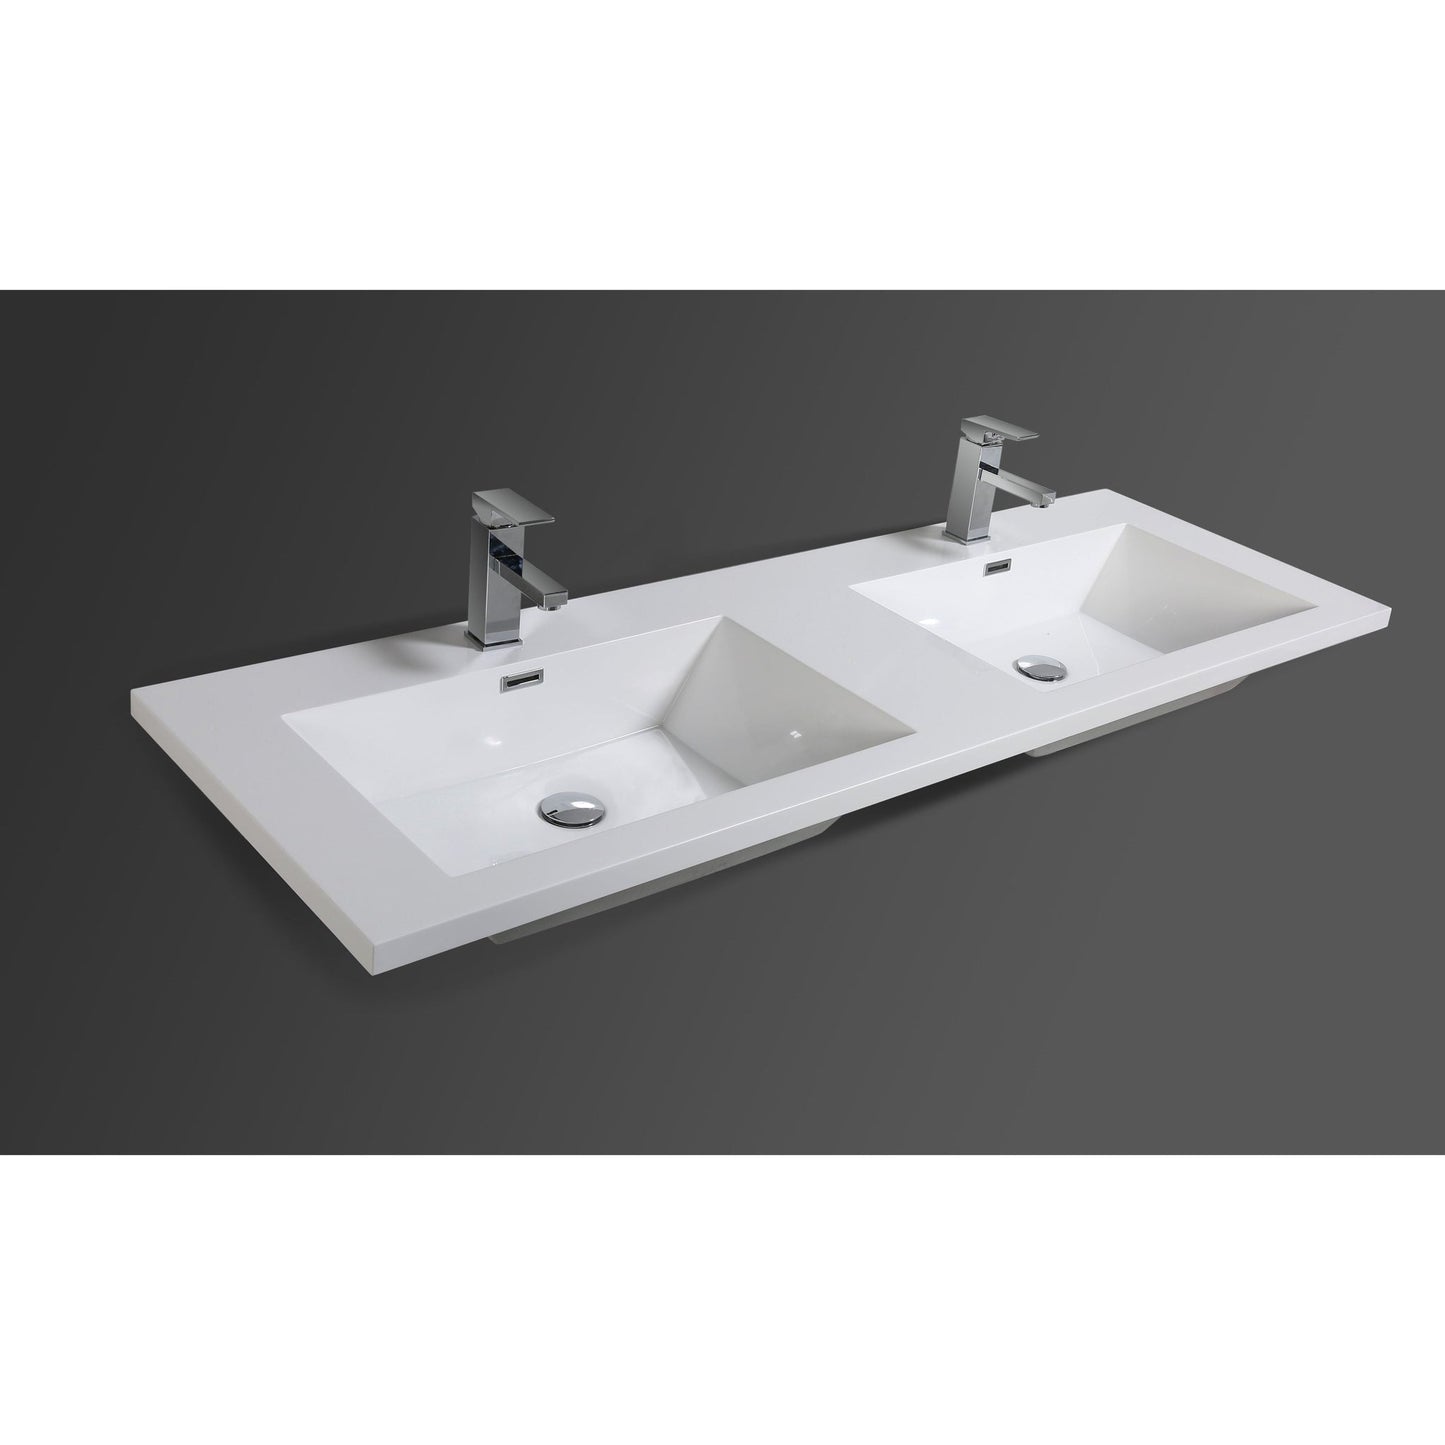 Moreno Bath Bohemia Lina 60" Rosewood Wall-Mounted Vanity With Double Reinforced White Acrylic Sinks